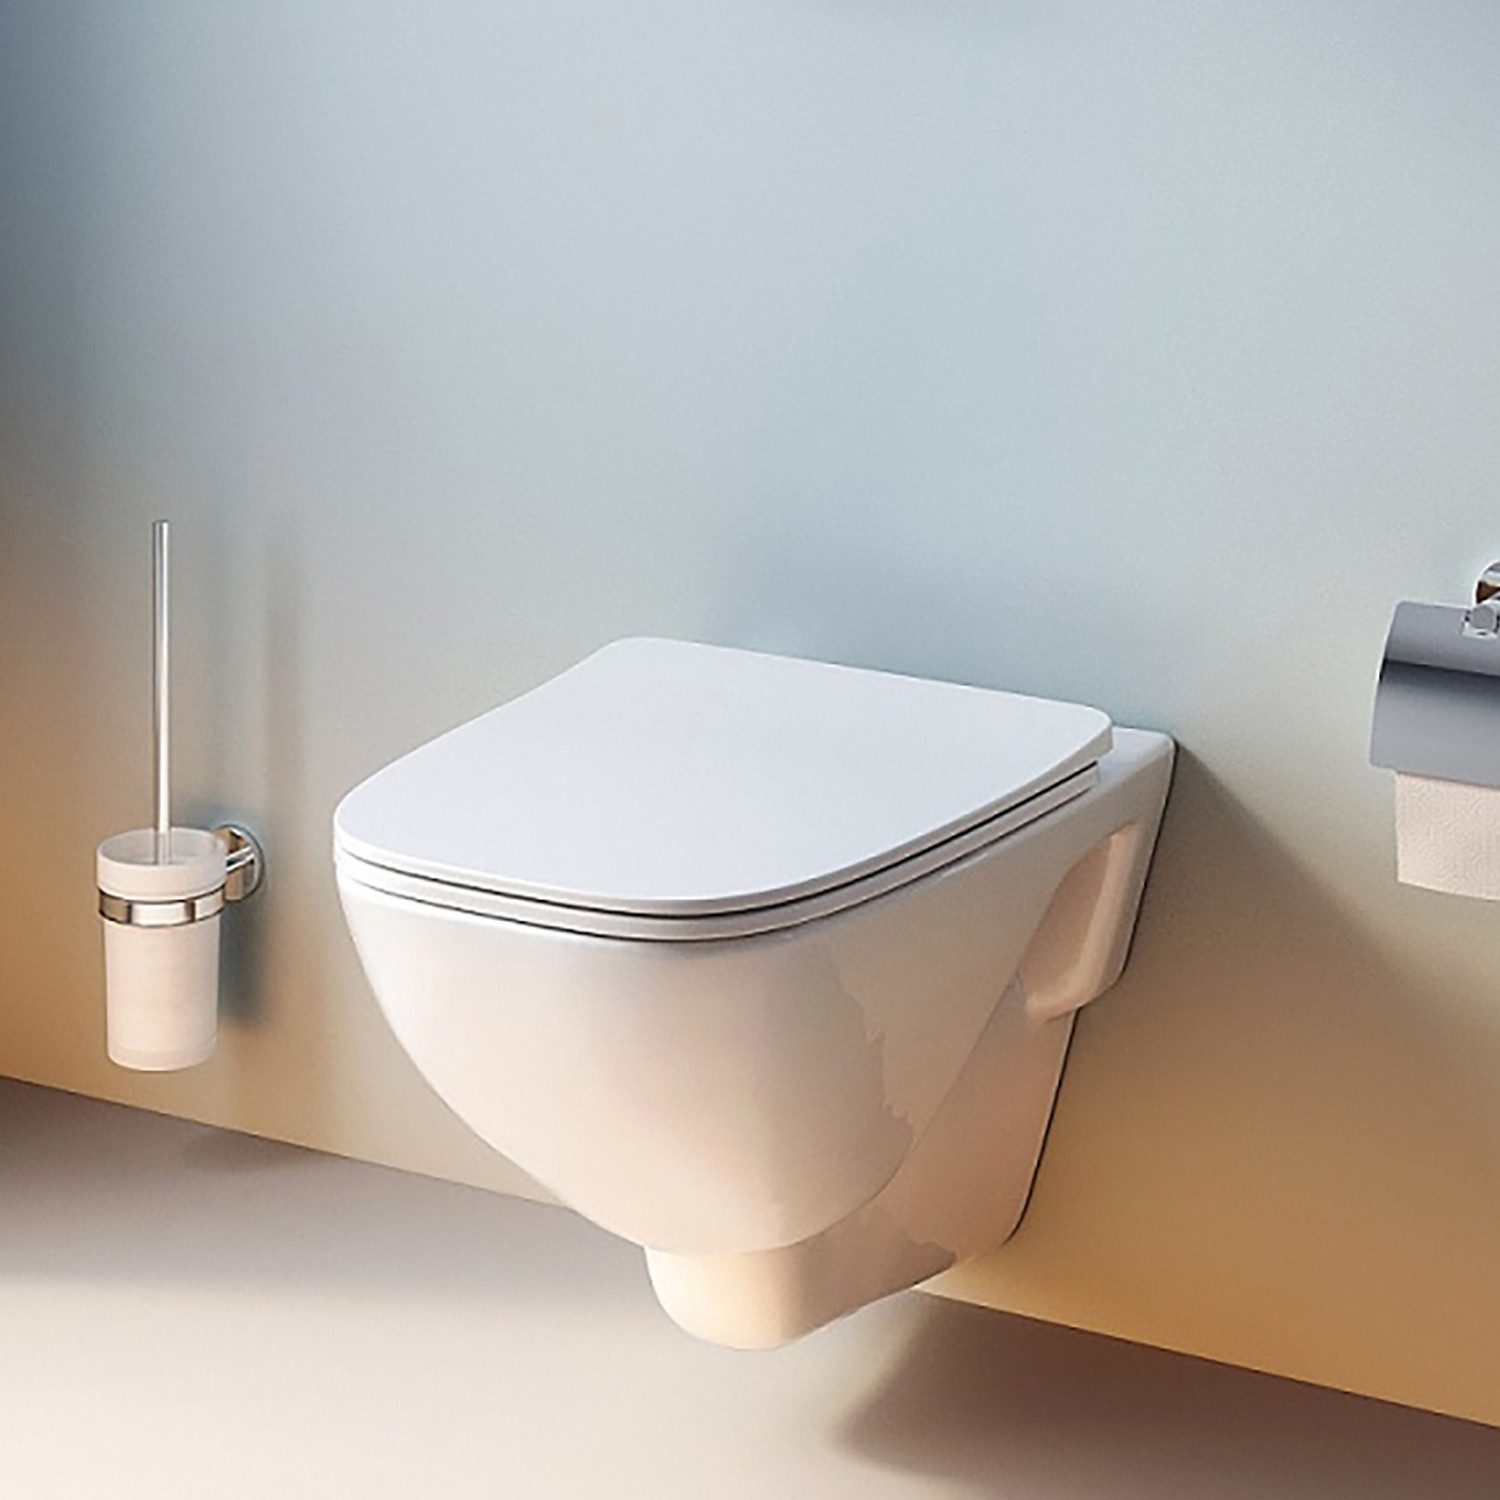 AM.PM Tiefspül-WC X-Joy Hänge WC Spülrandloses WC,Tiefspüler, wandhängend, Abgang waagerecht, Schnellverschluss-Sitz mit Soft-Close-Funktion, Flash Clean